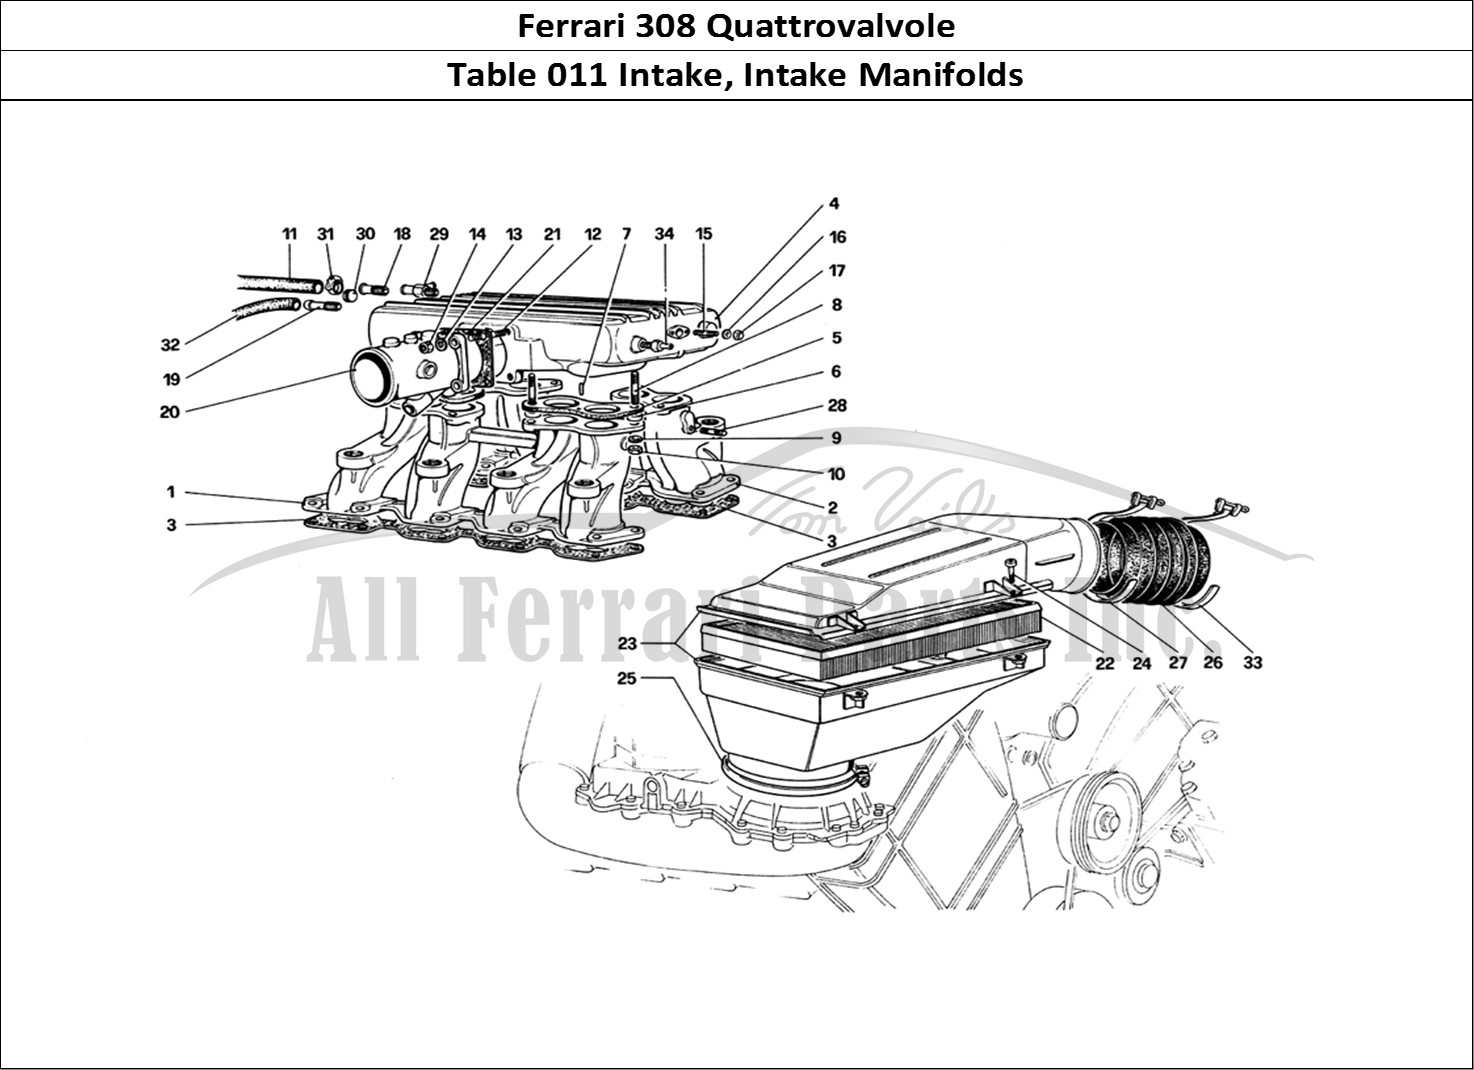 Ferrari Parts Ferrari 308 Quattrovalvole (1985) Page 011 Air Intake and Manifolds